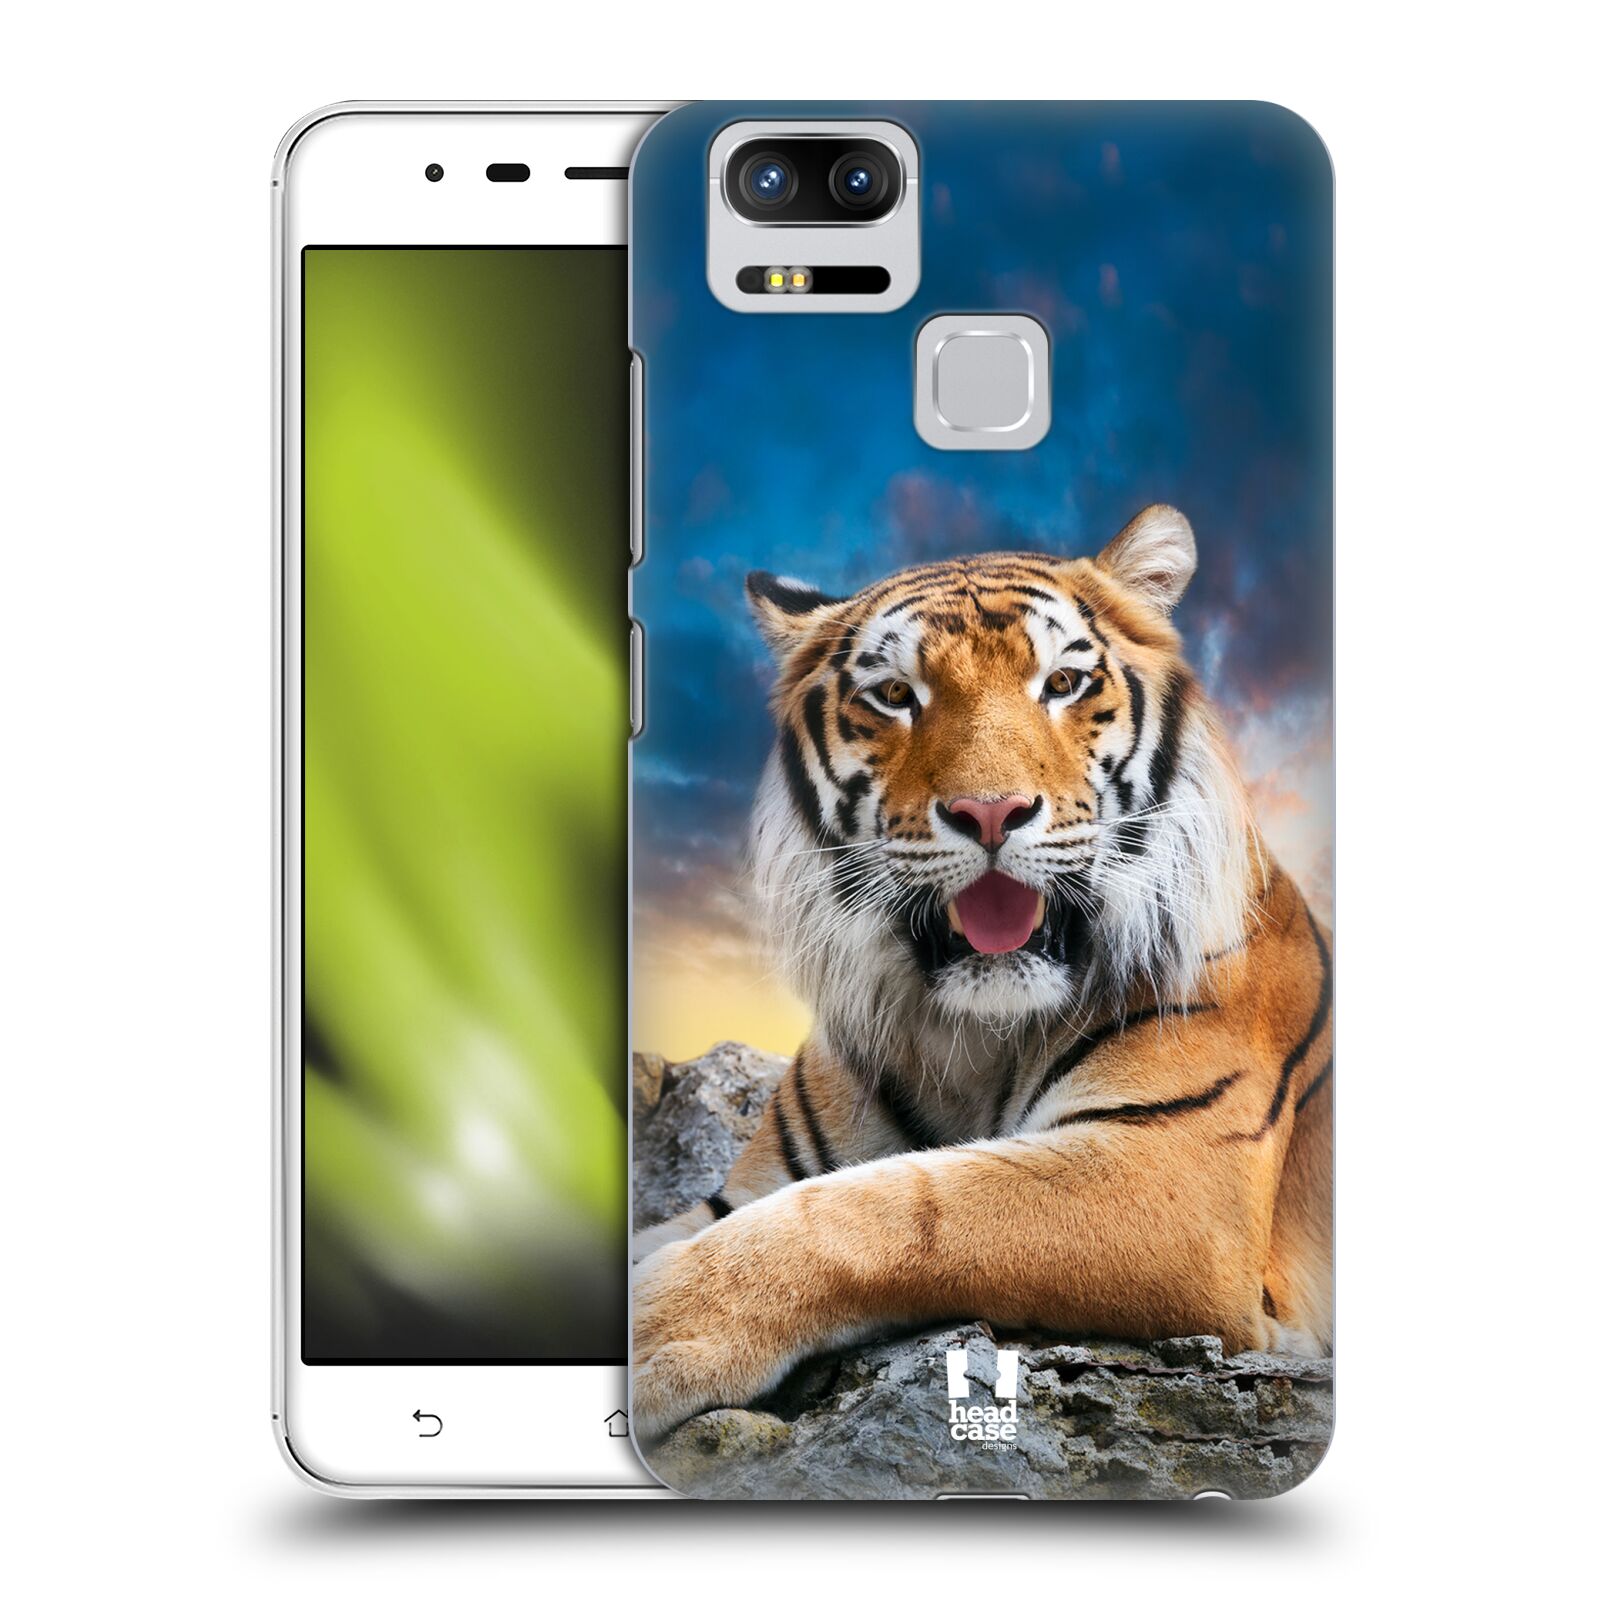  HEAD CASE plastový obal na mobil Asus Zenfone 3 Zoom ZE553KL vzor Divočina, Divoký život a zvířata foto TYGR A NEBE